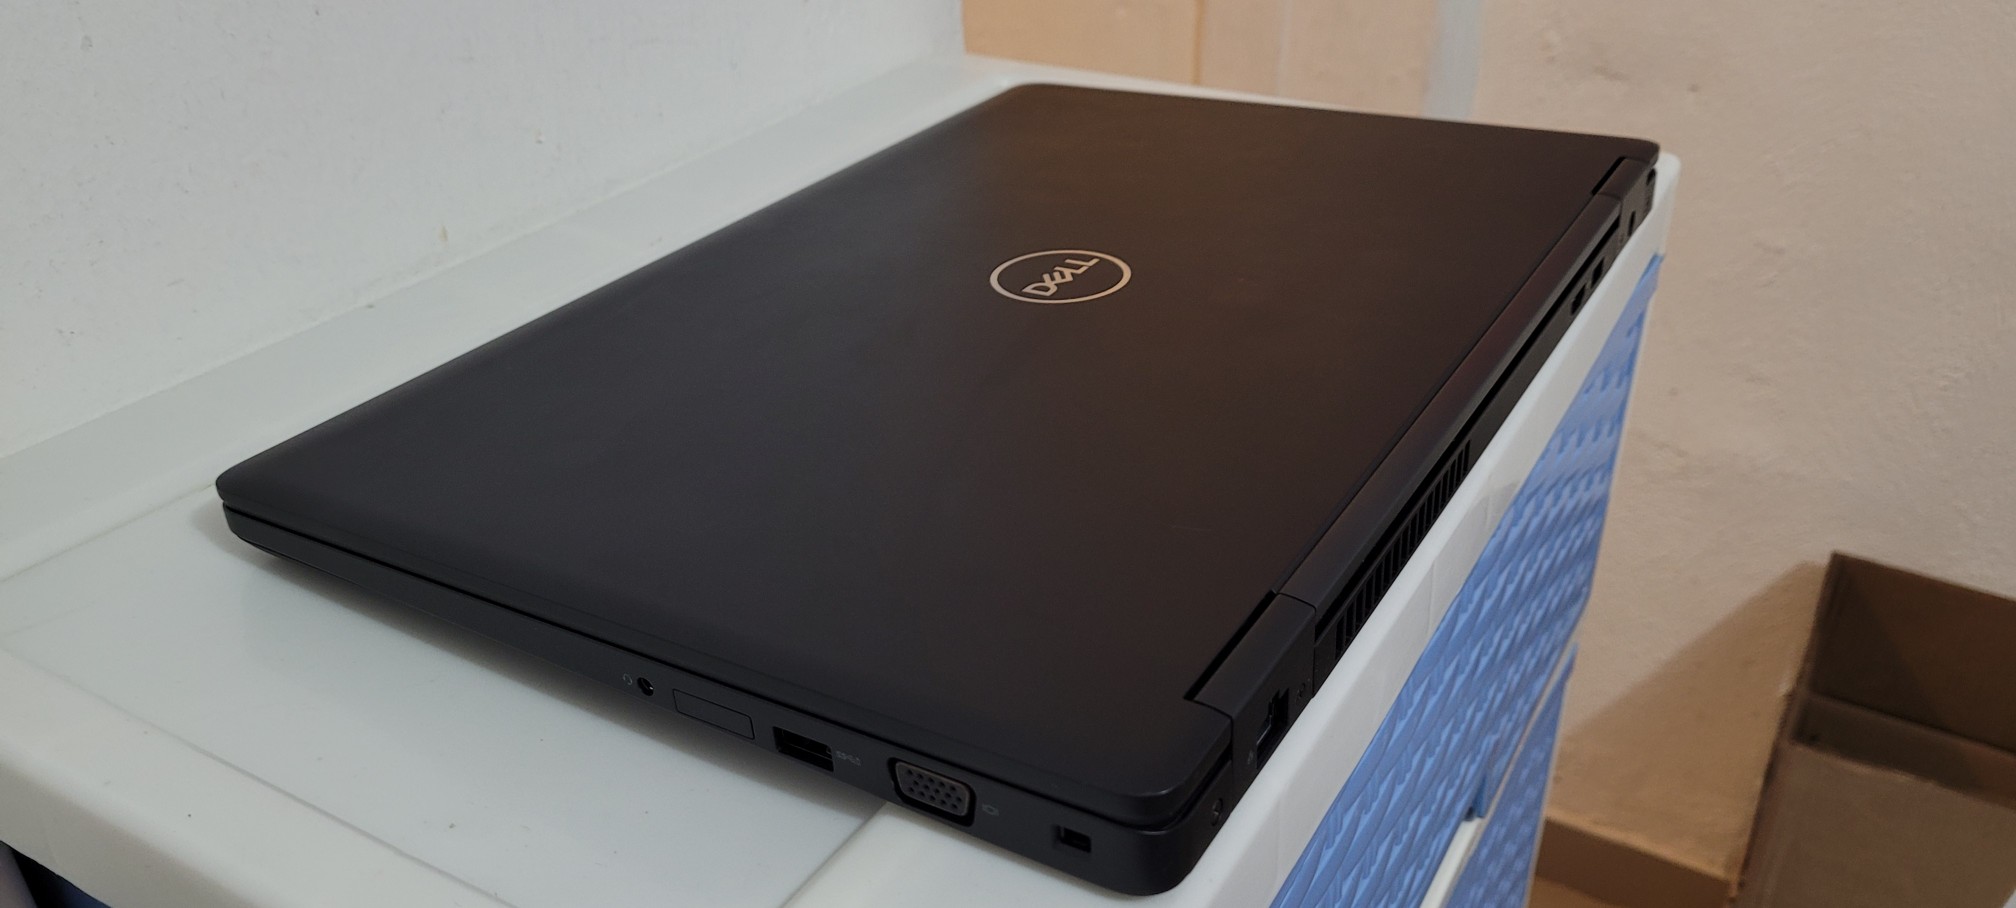 computadoras y laptops - Dell 5591 17 Pulg Core i7 8va Ram 16gb ddr4 Disco 512gb SSD Nvidea 2gb Dedicada 2